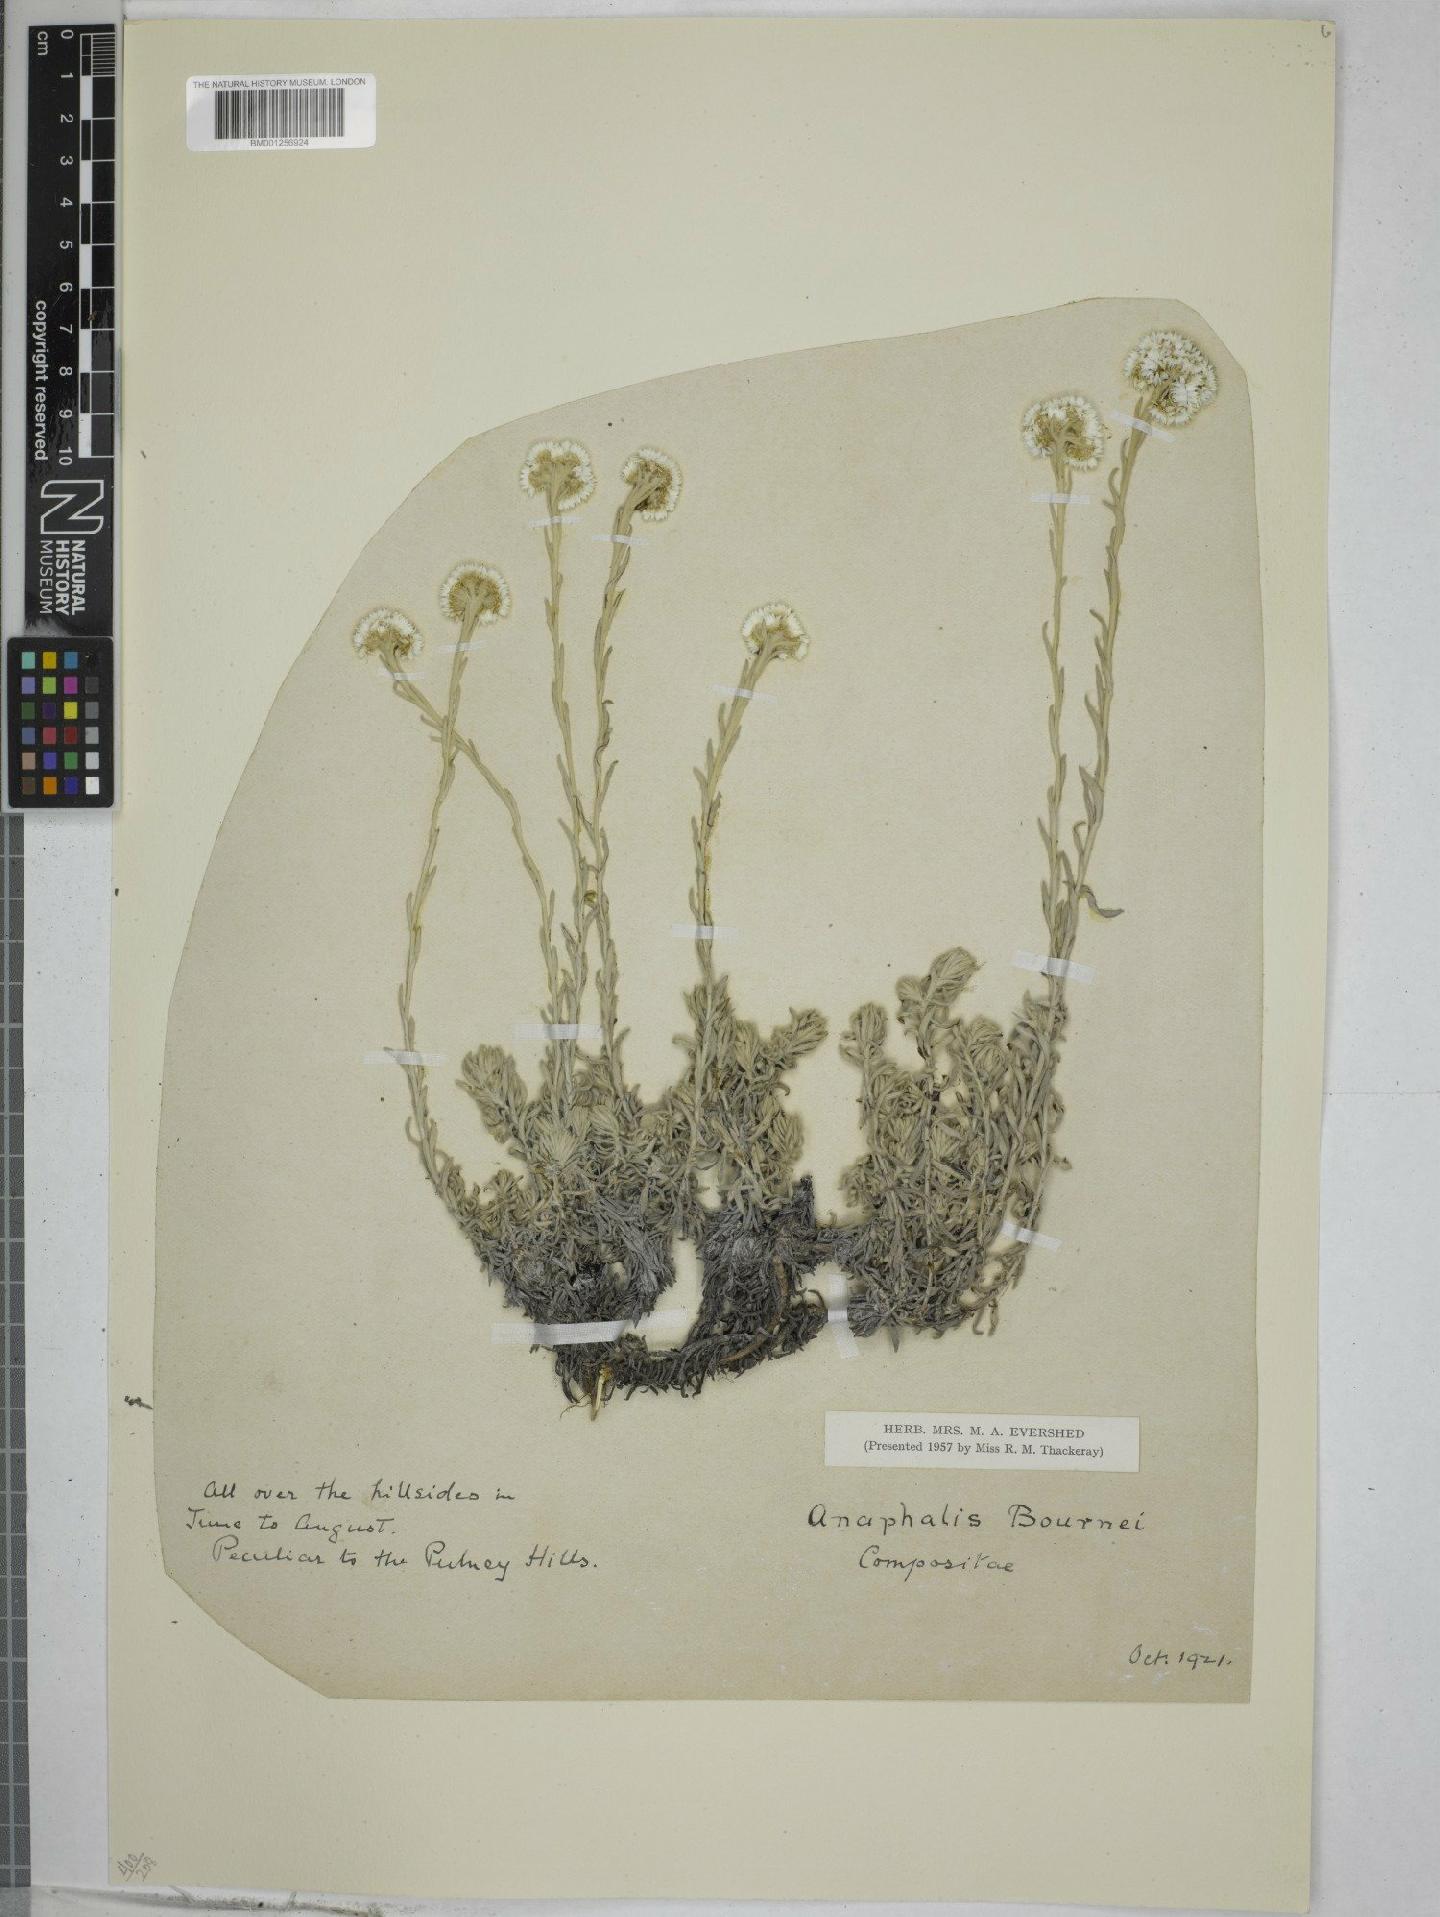 To NHMUK collection (Anaphalis bournei Fyson; NHMUK:ecatalogue:9151727)